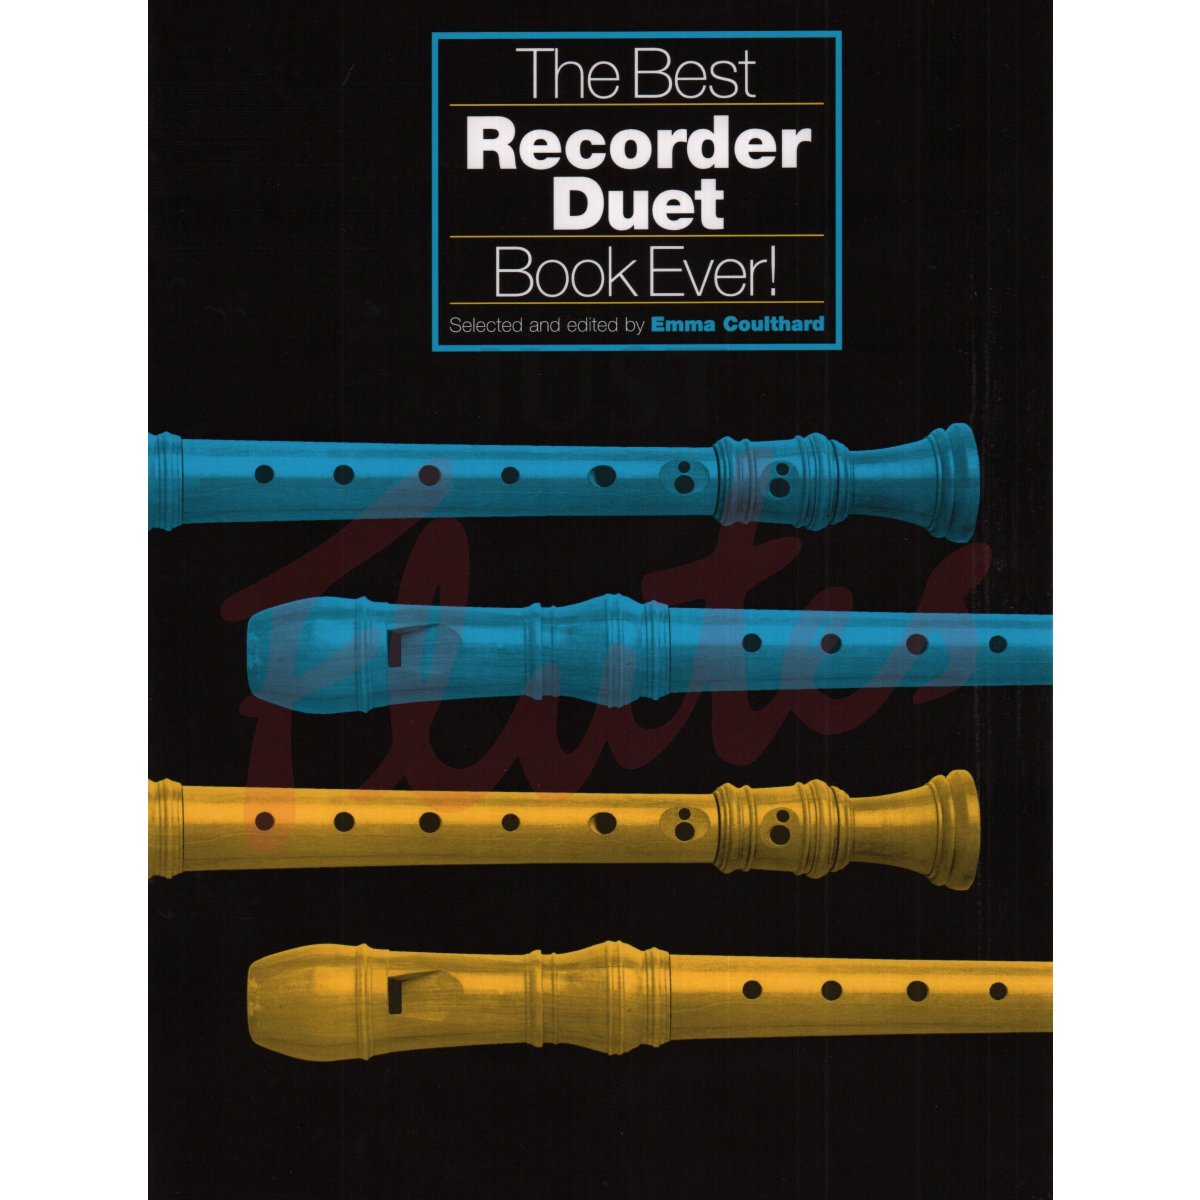 The Best Recorder Duet Book Ever!